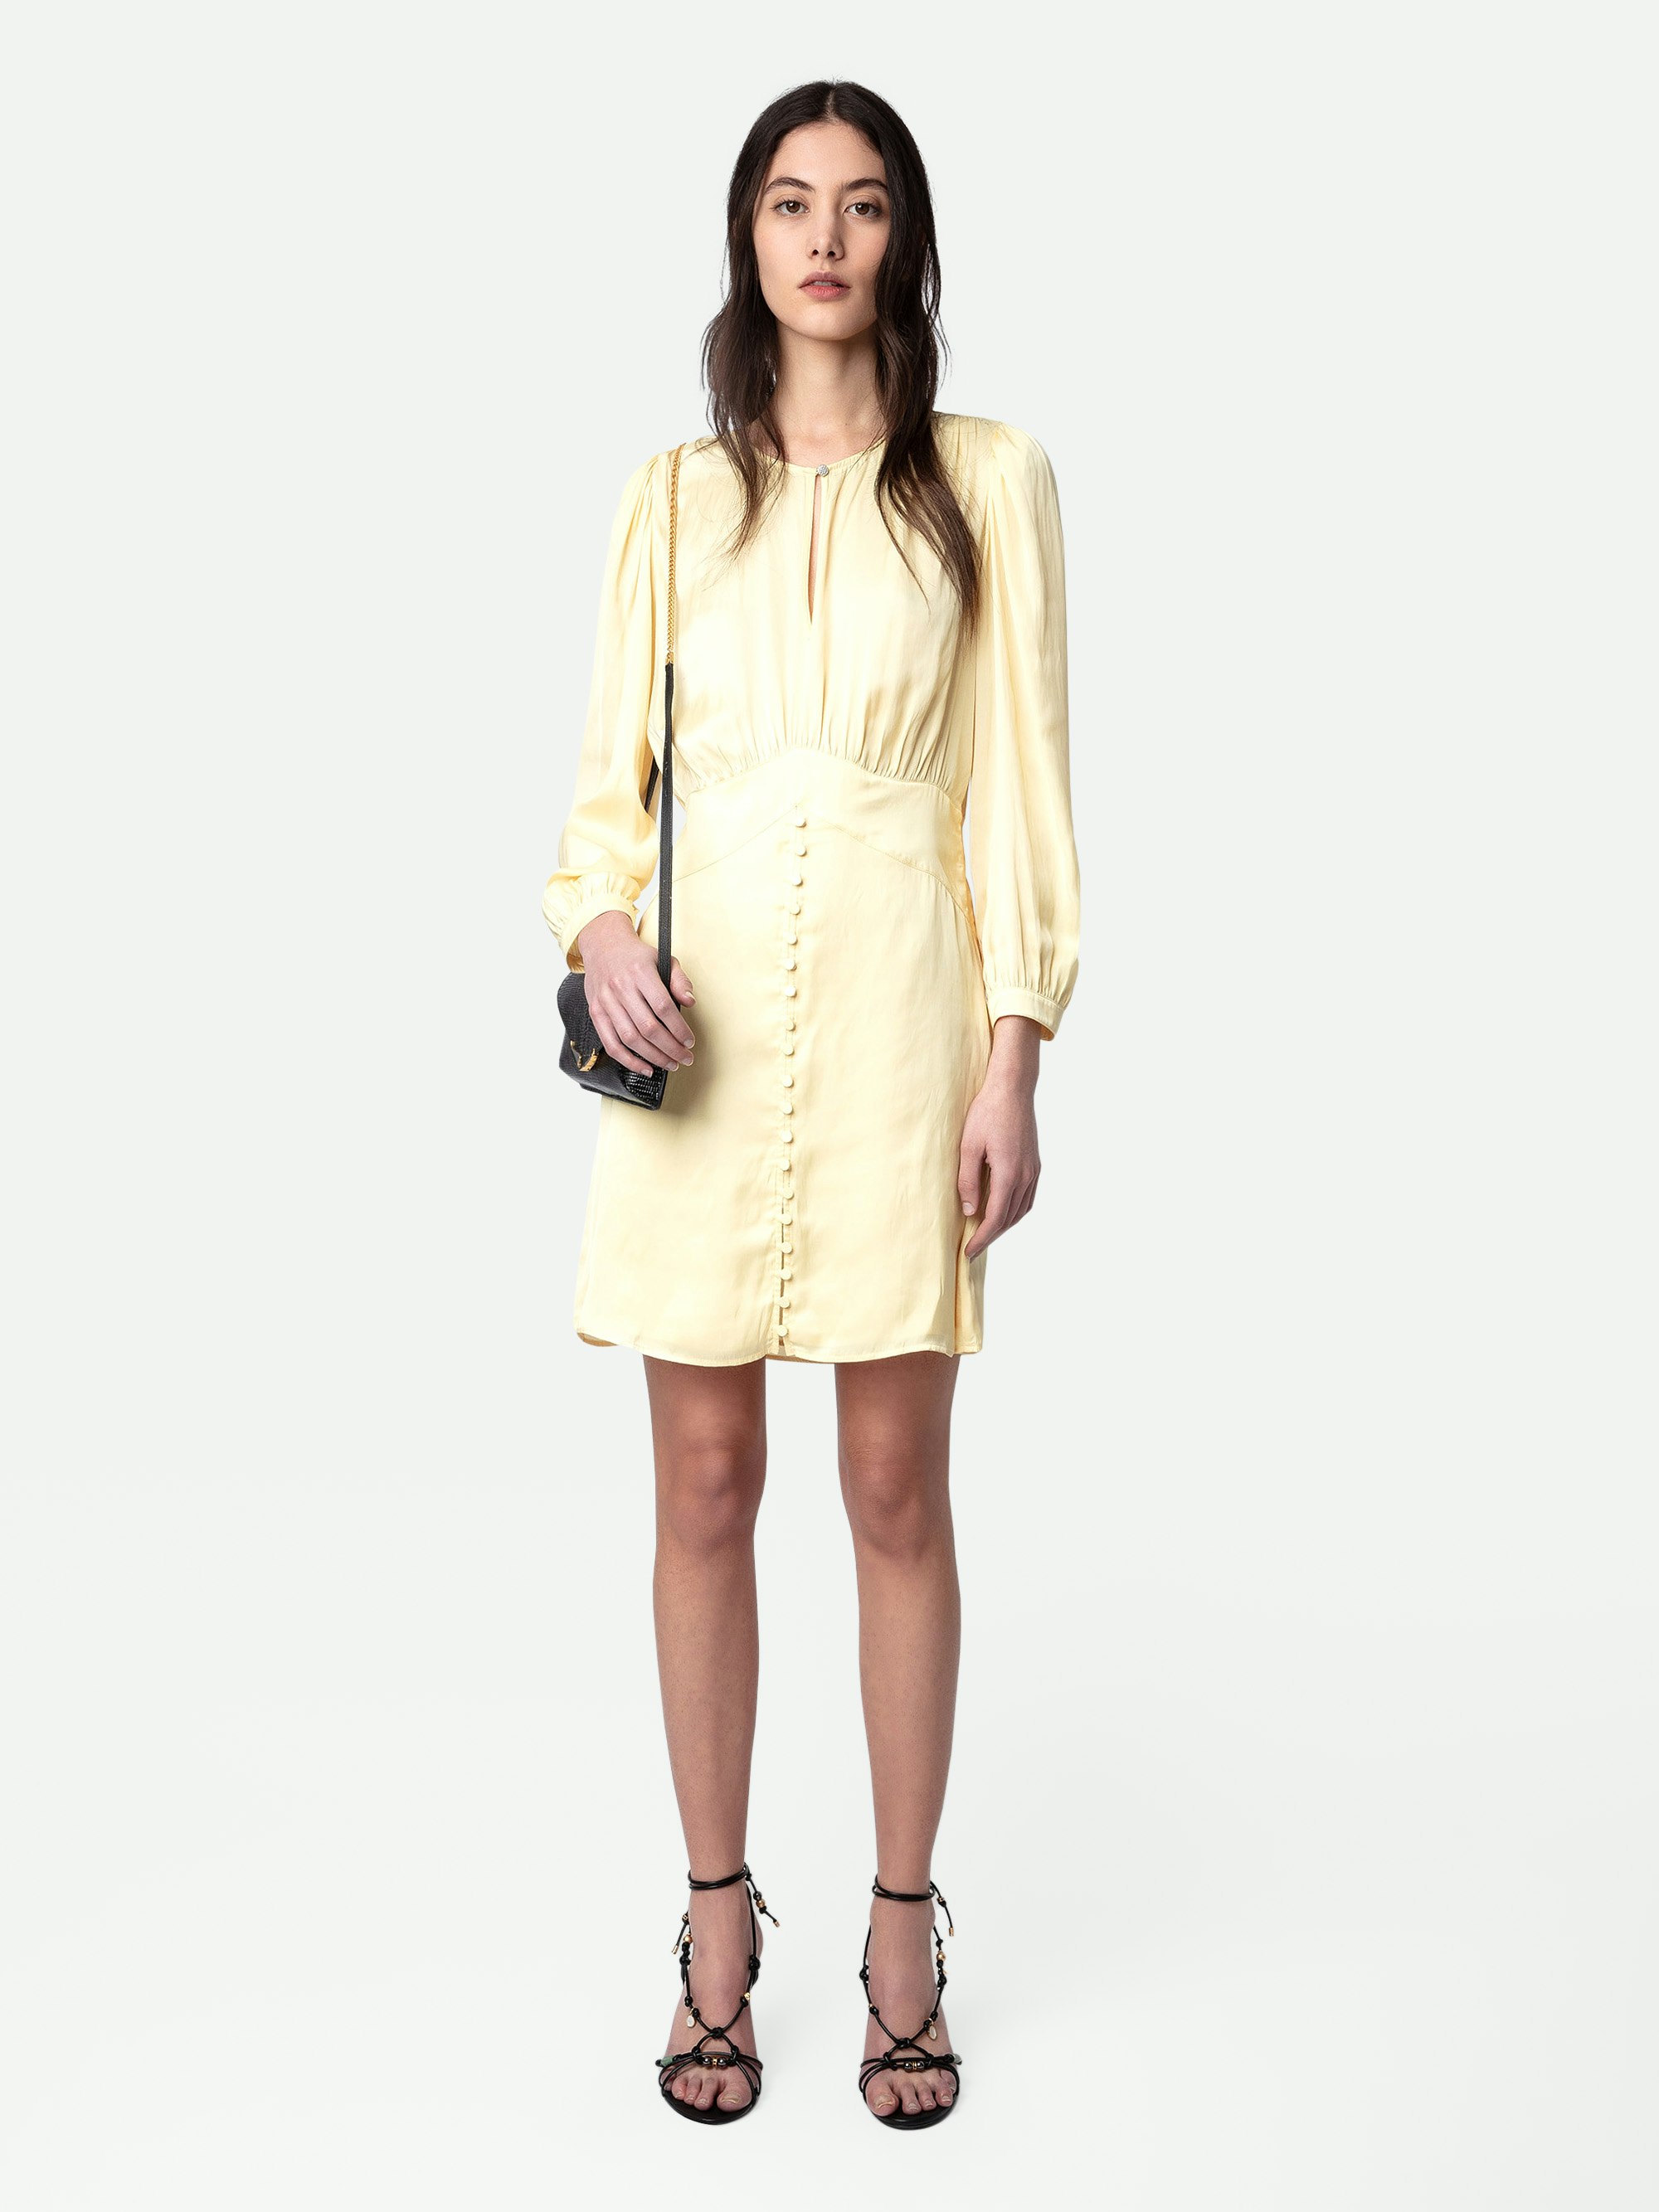 Rhodri Satin Dress - Light yellow satin mini dress with button closure and 3/4-length sleeves.